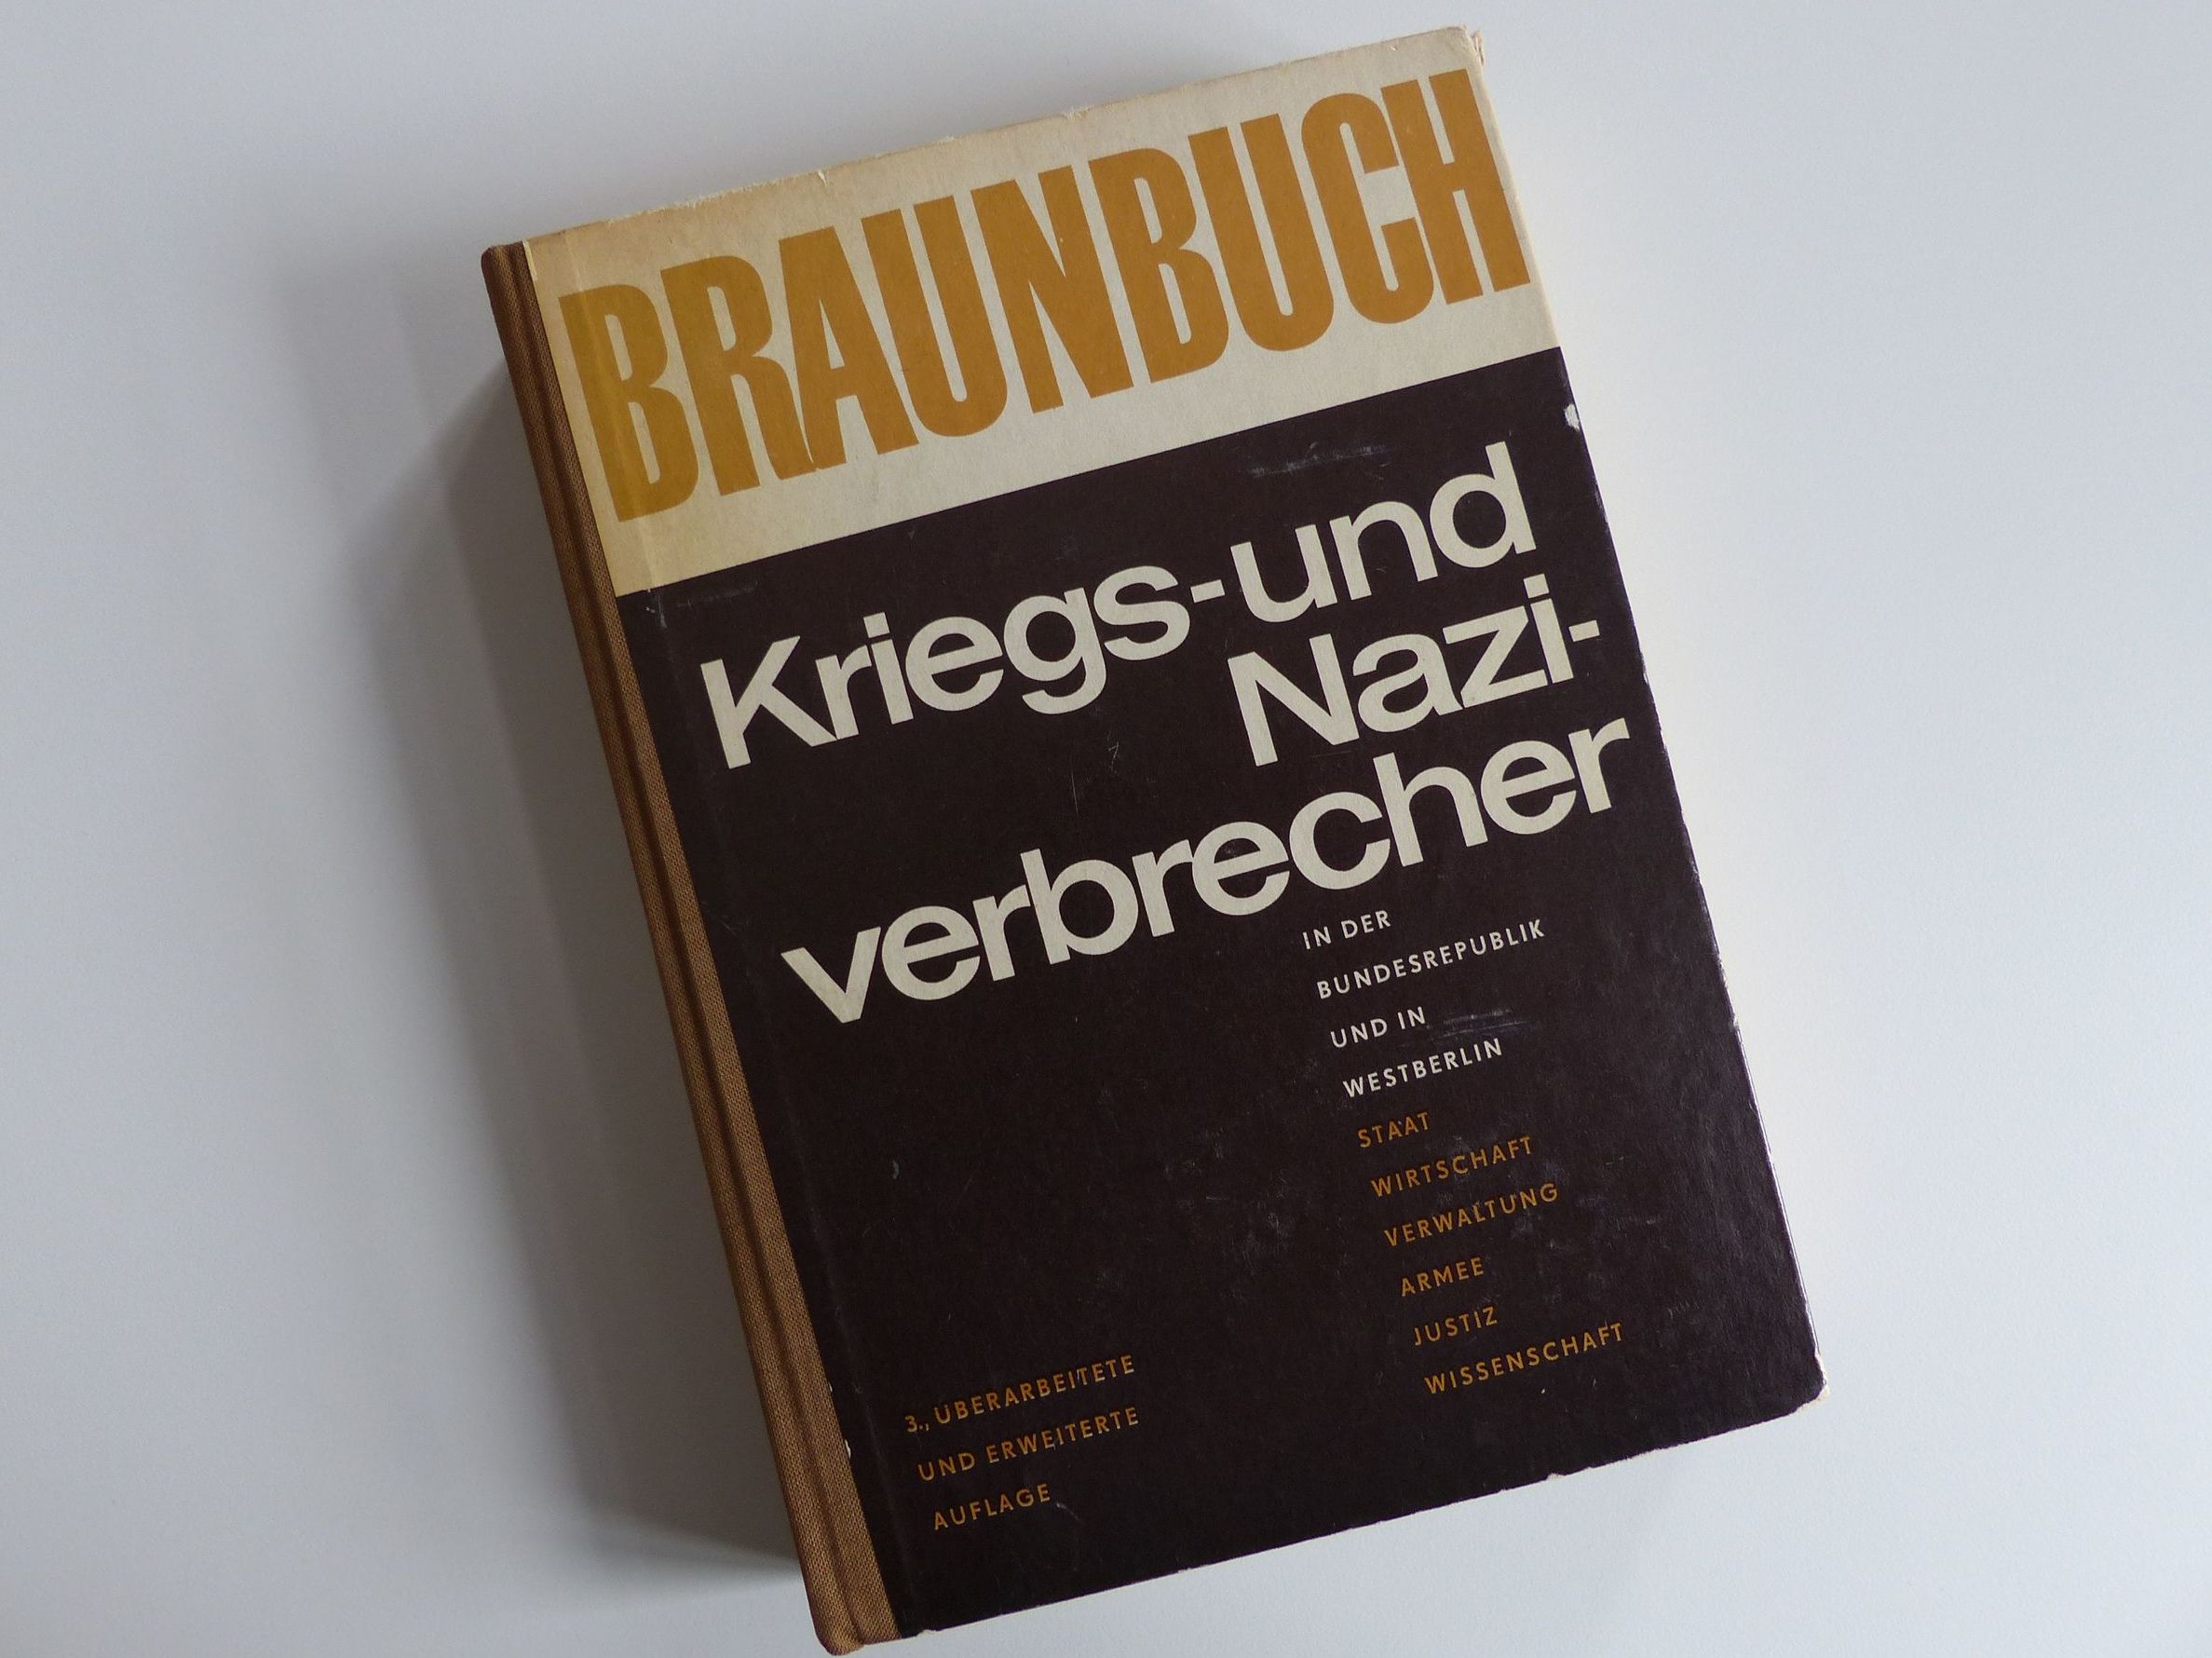 Braunbuch der DDR